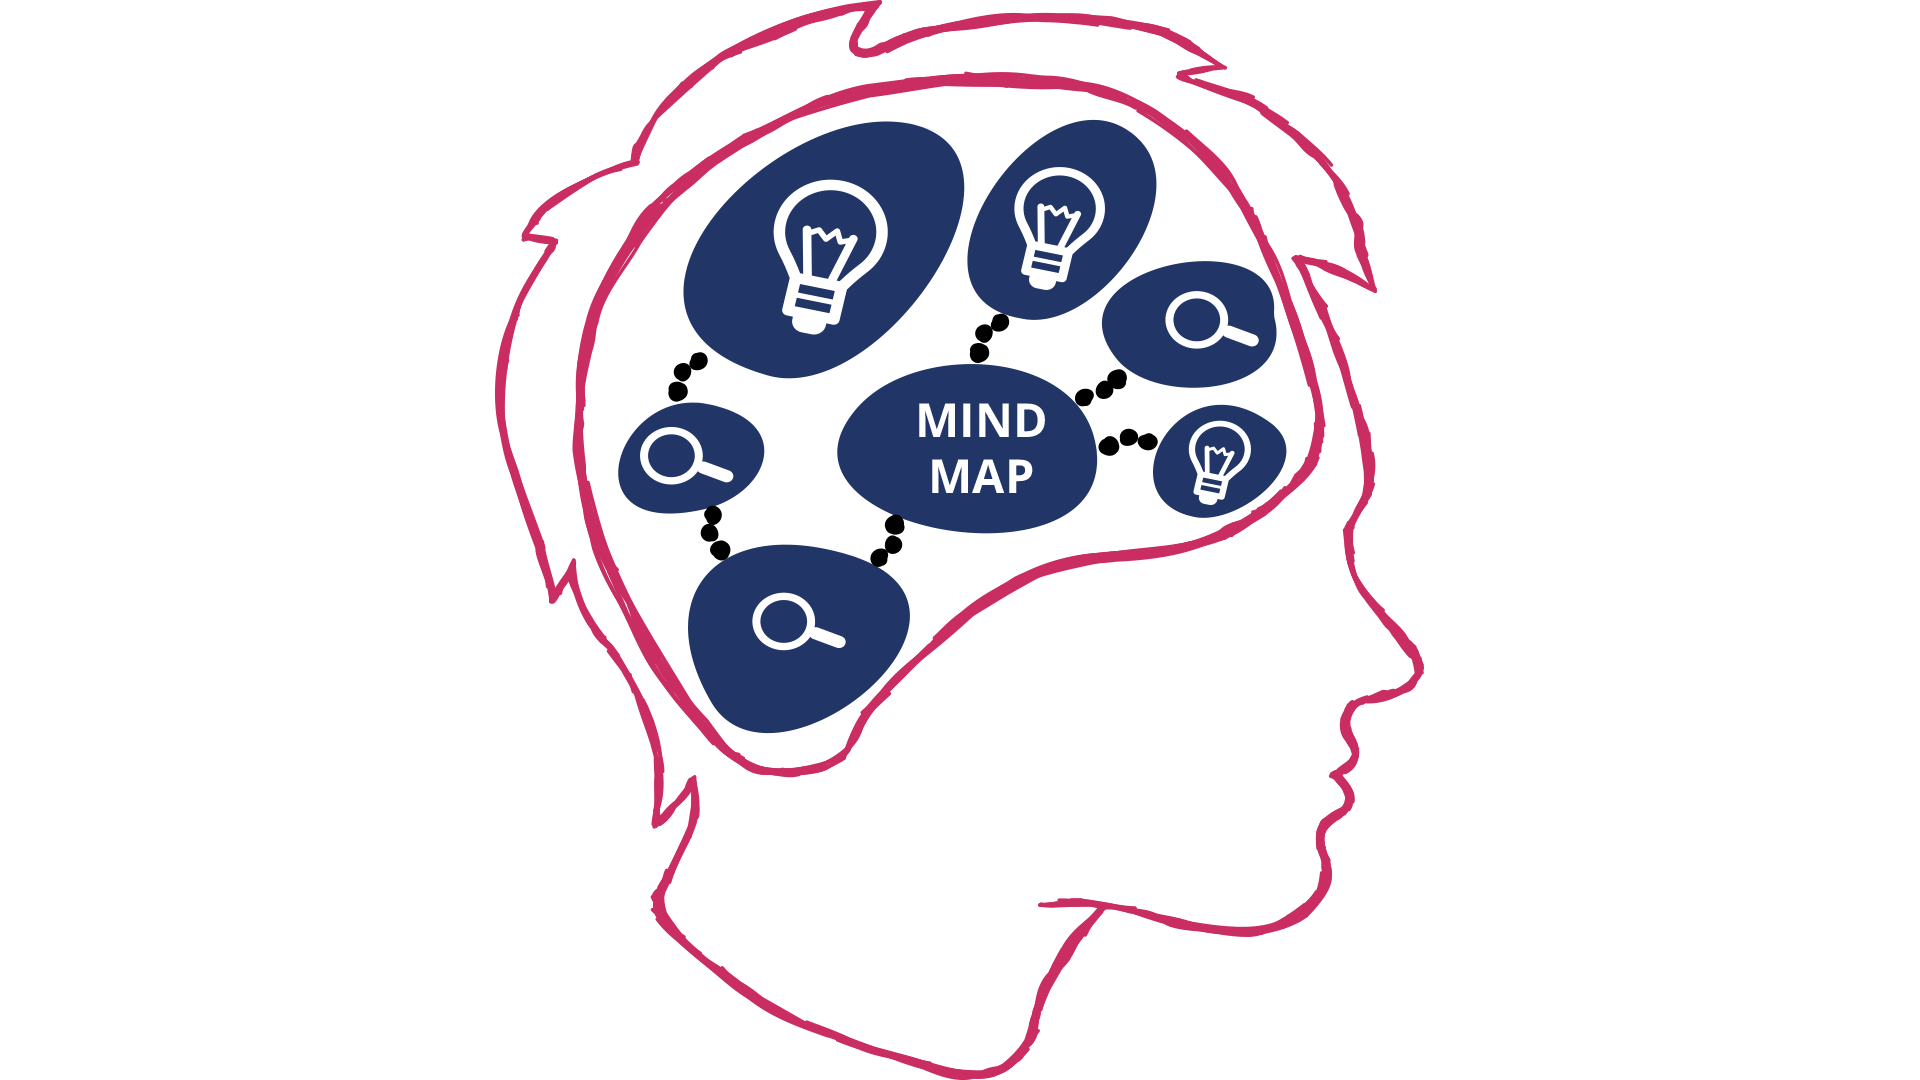 mind-maps